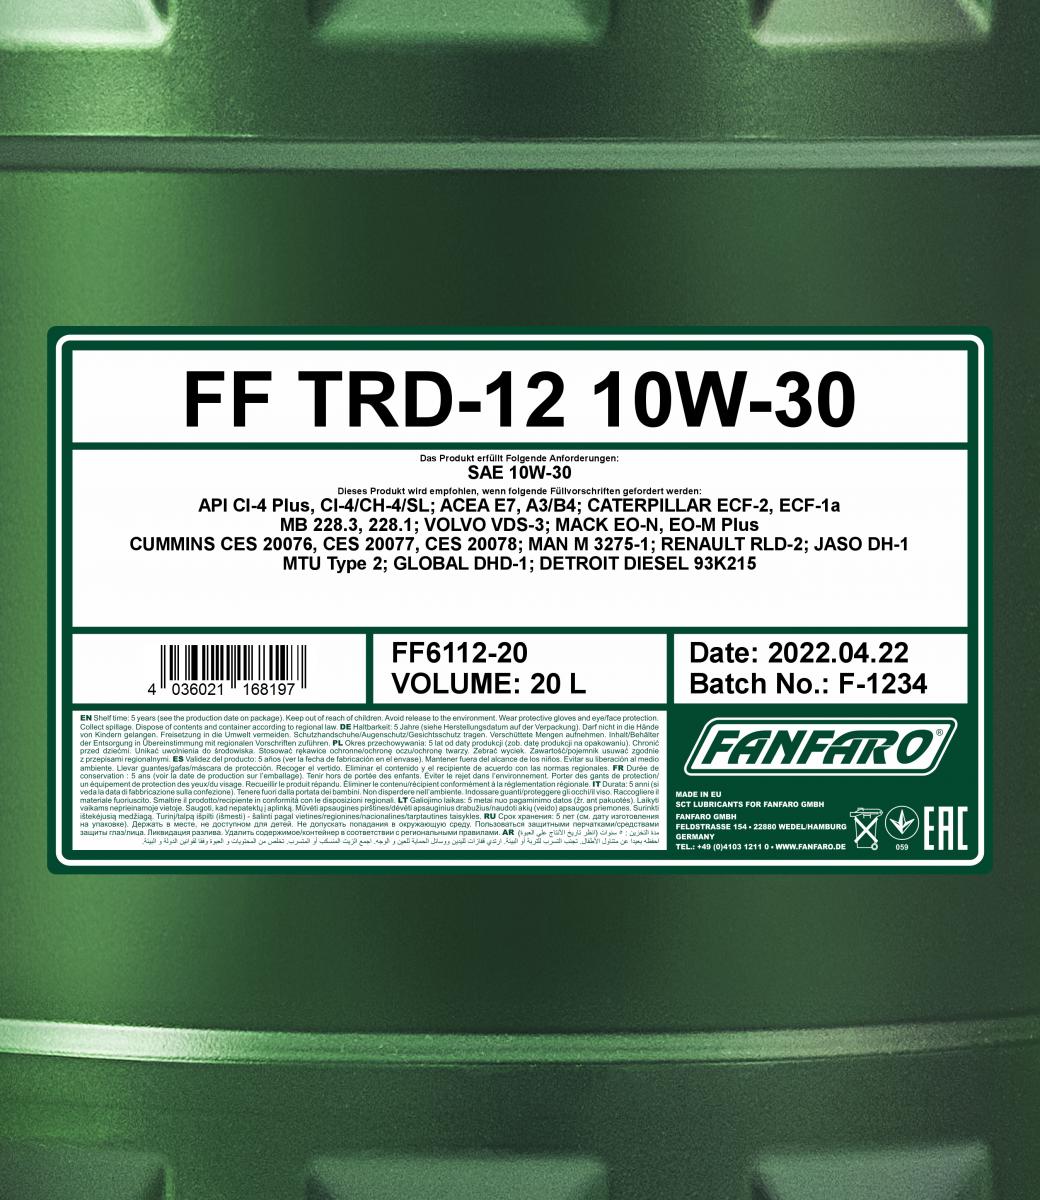 20L (1x20) FANFARO TRD-12 SHPD 10W-30 API CI-4 Plus NKW Motoröl Motorenöl Diesel